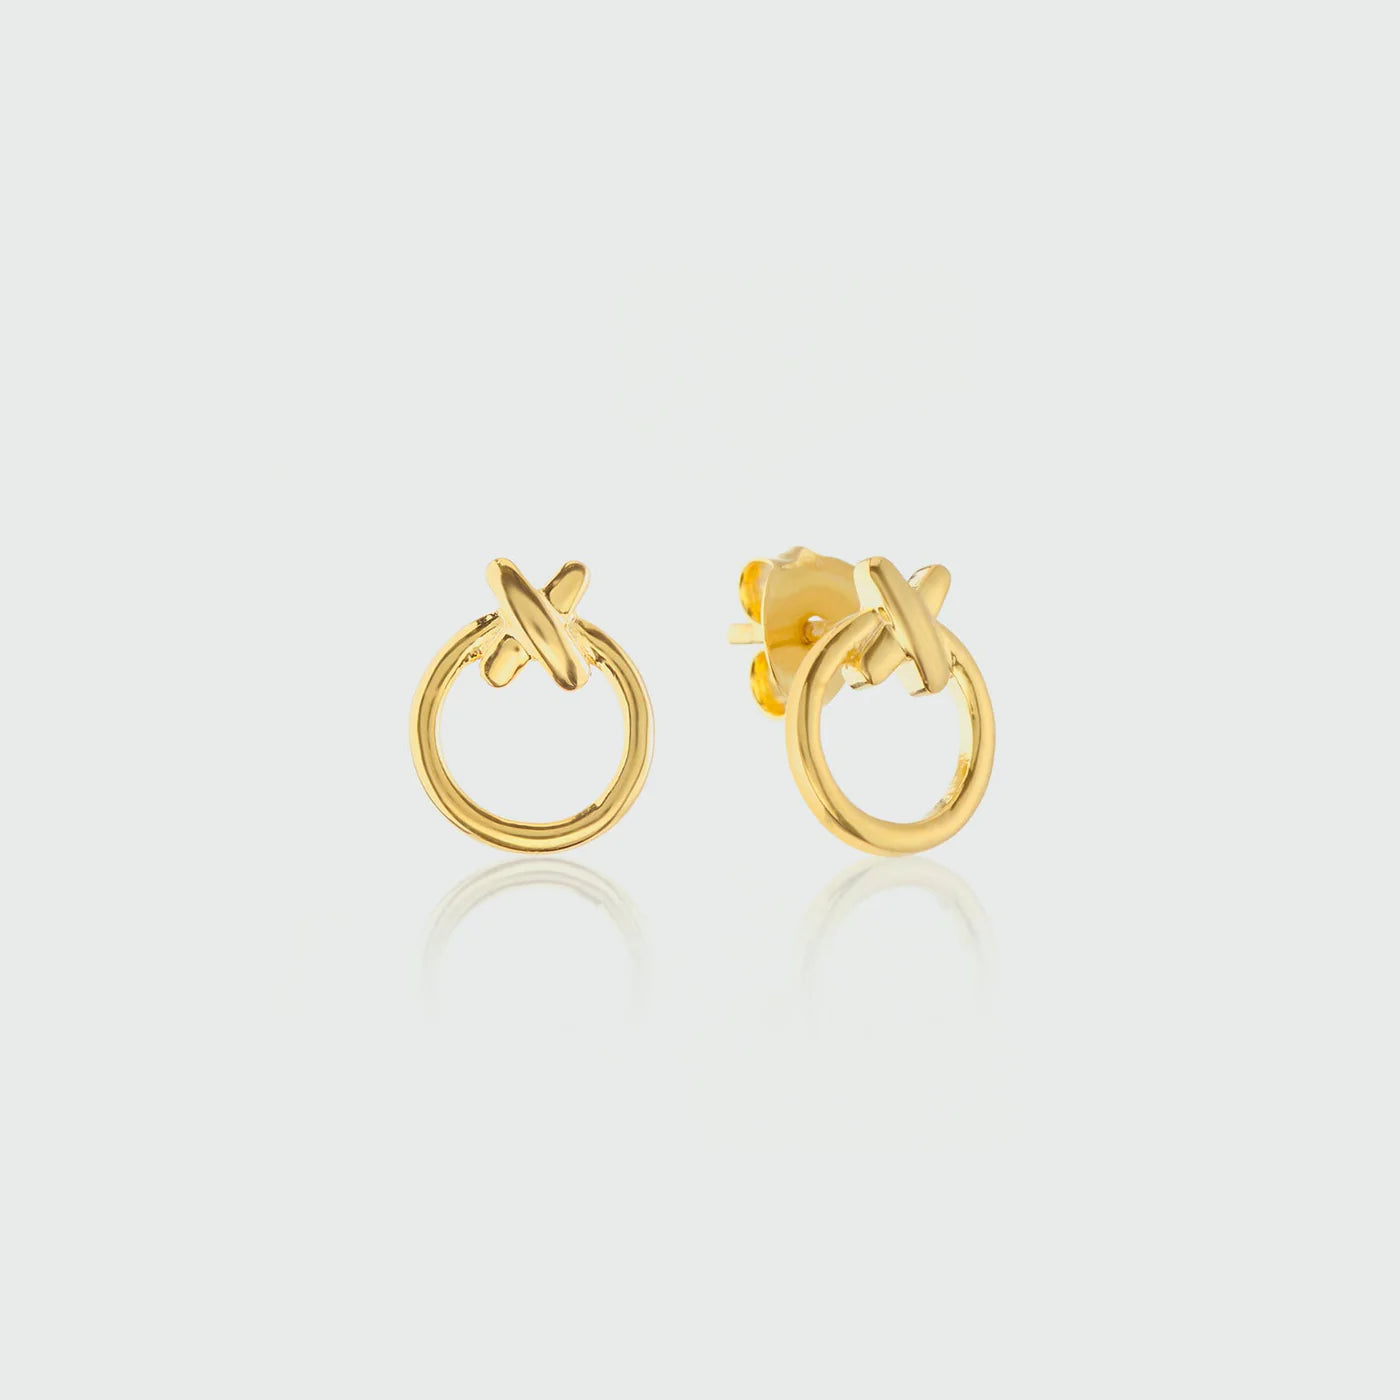 Friendship Kiss Stud Earrings: Gold Vermeil or Sterling Silver